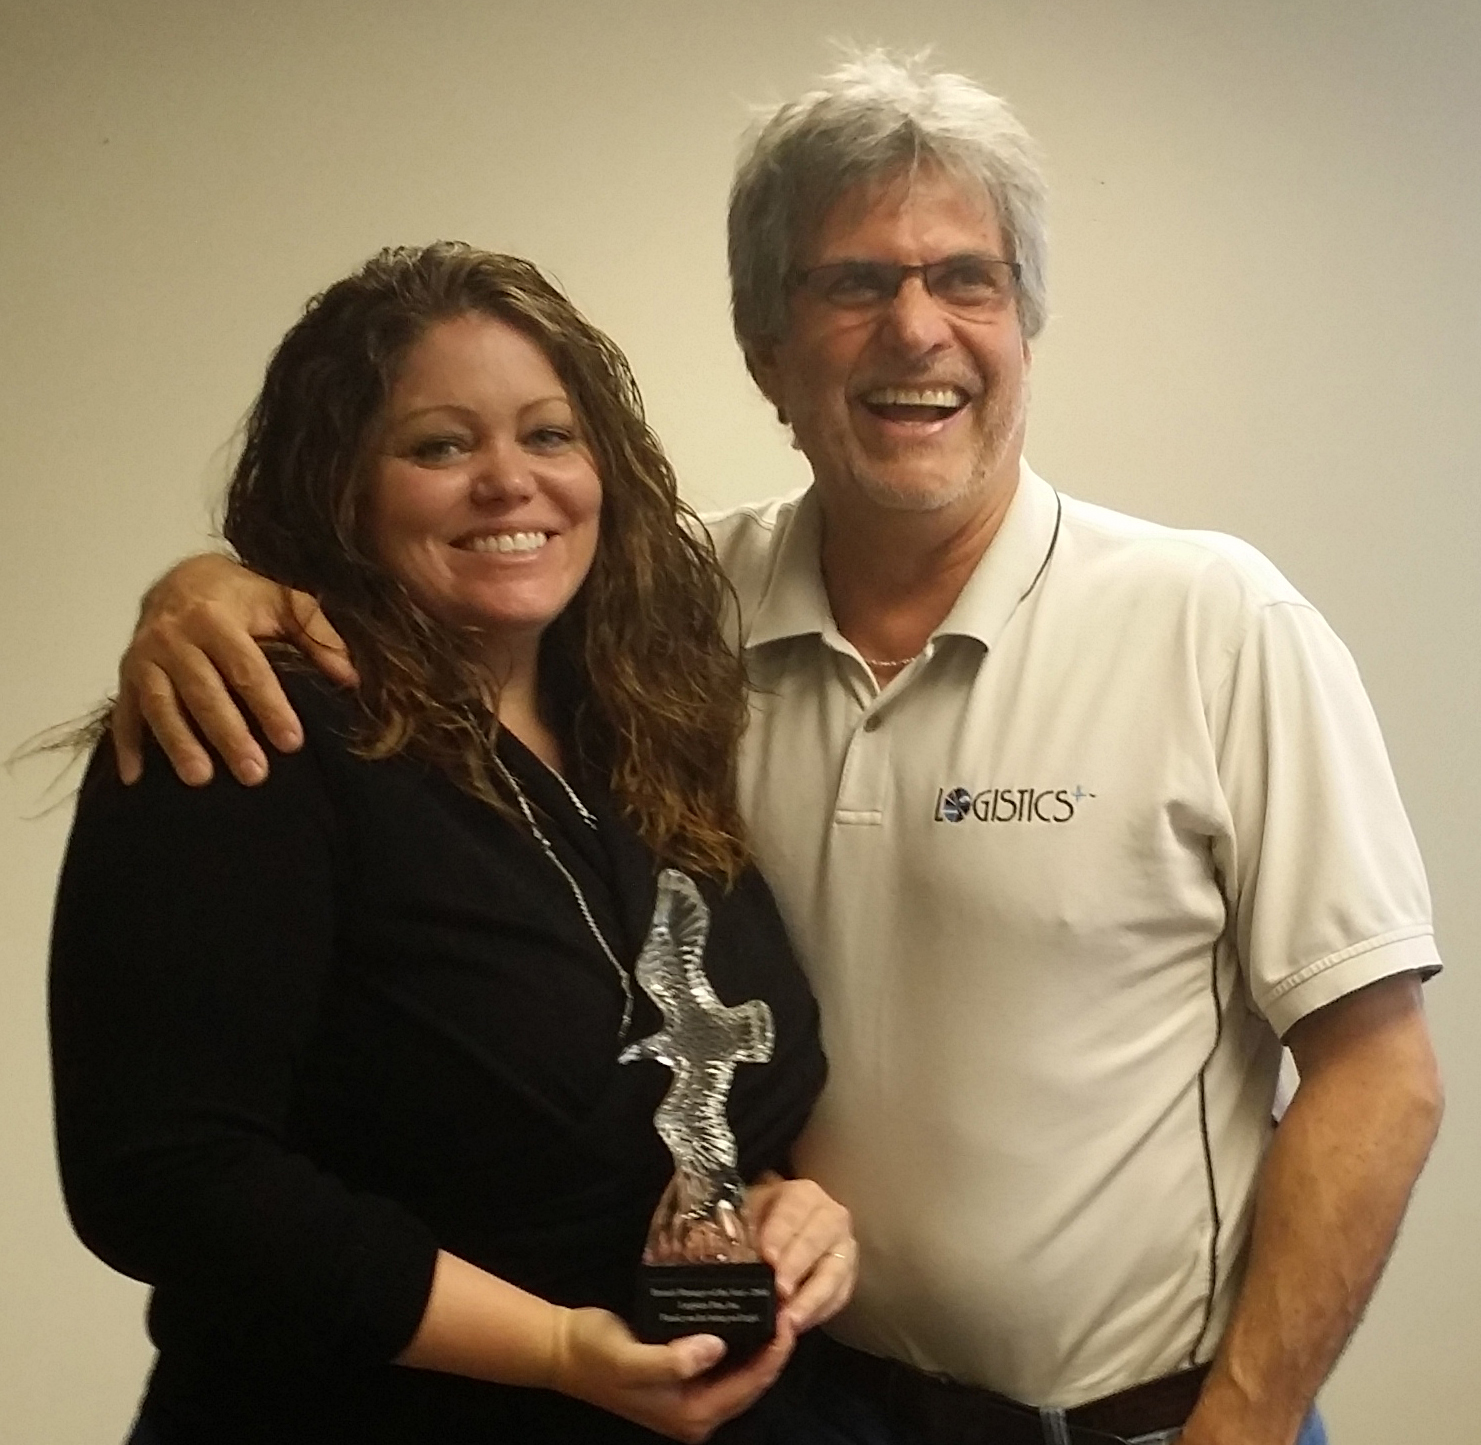 Logistics Plus Dallas Branch Wins 2014 Award